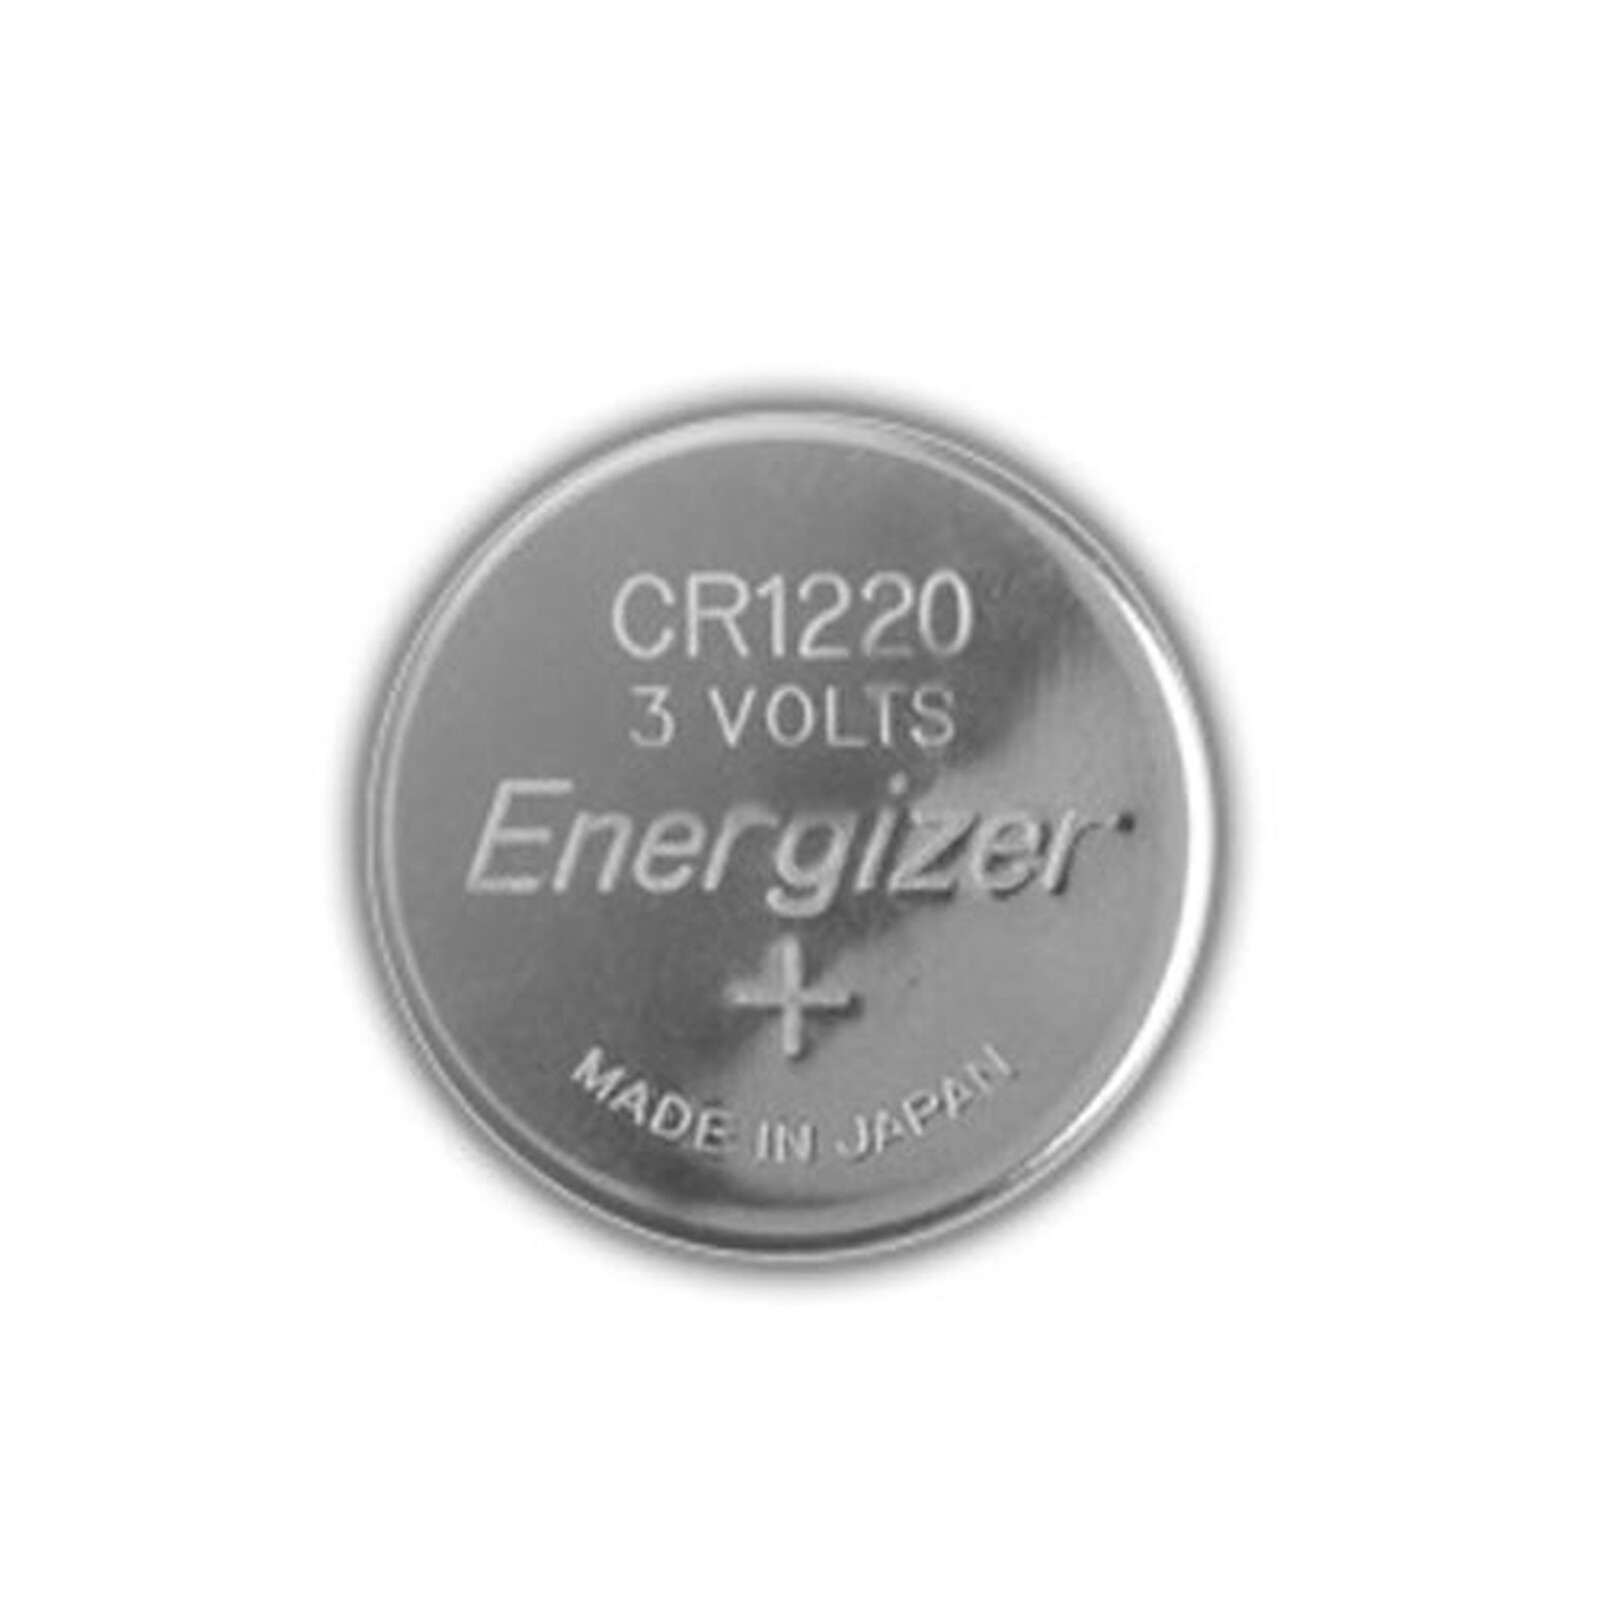 Energizer Pile bouton CR 1632 lithium 3 V